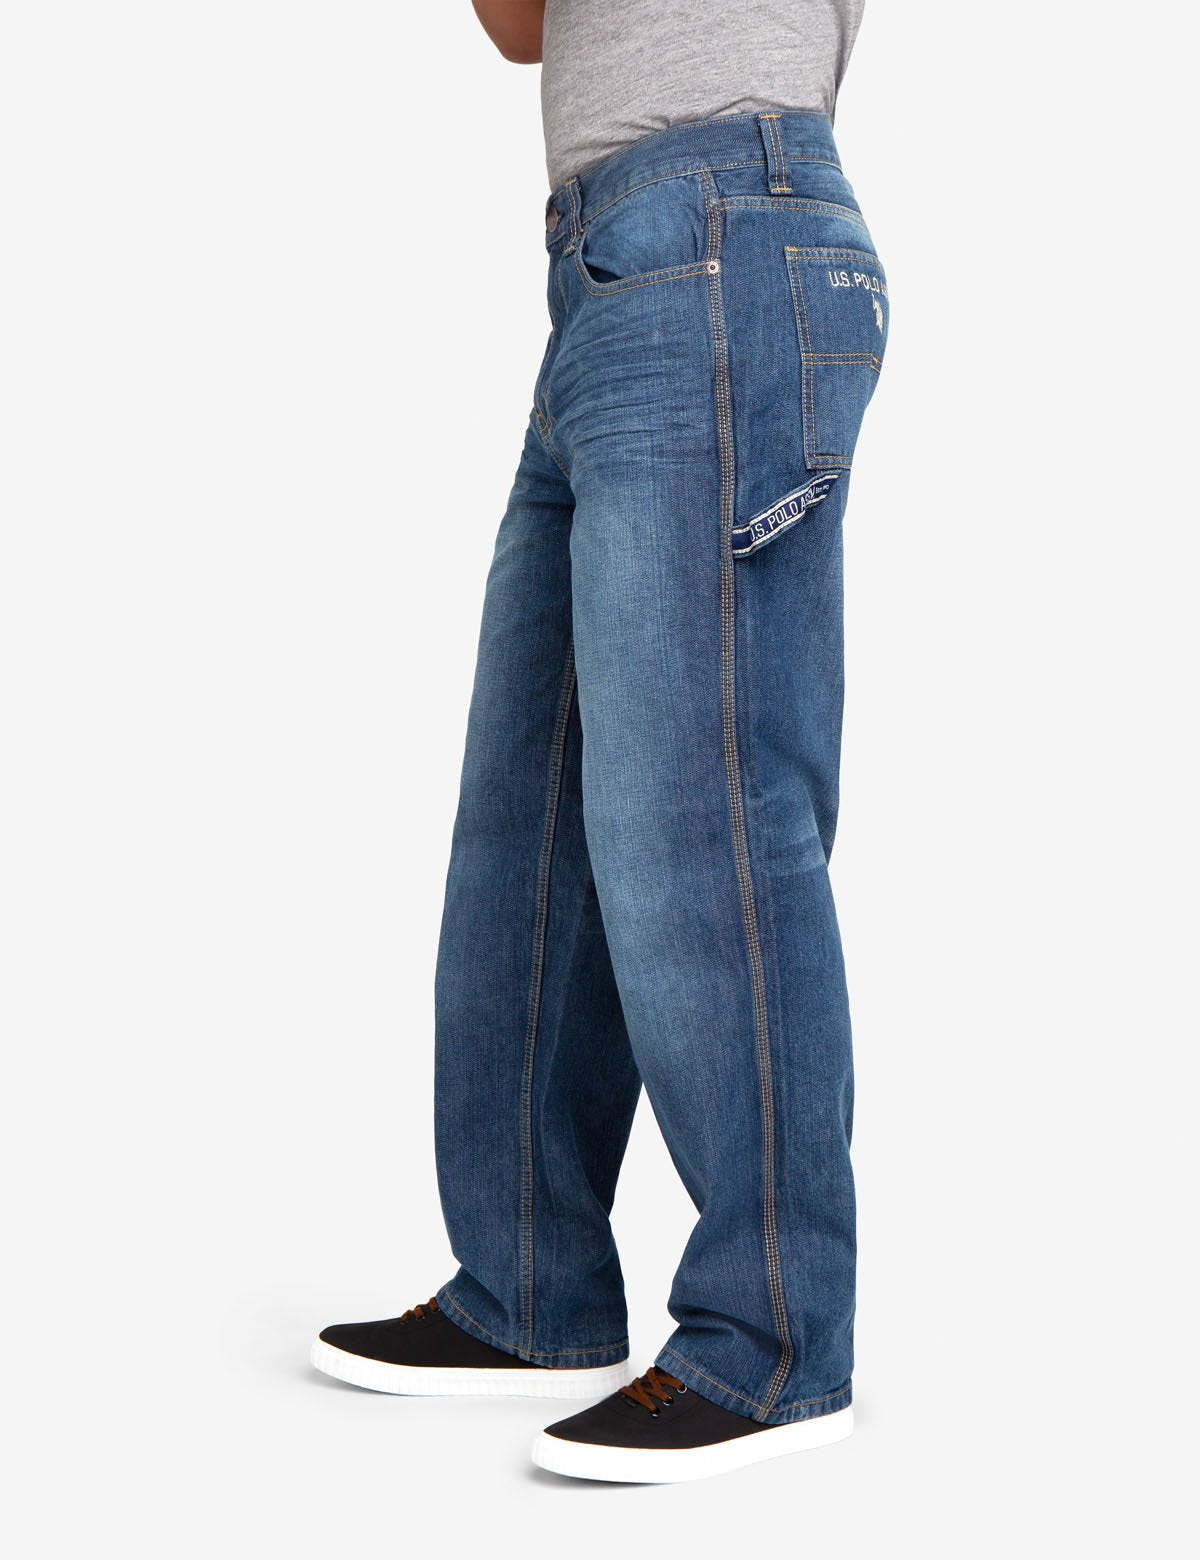 jeans polo